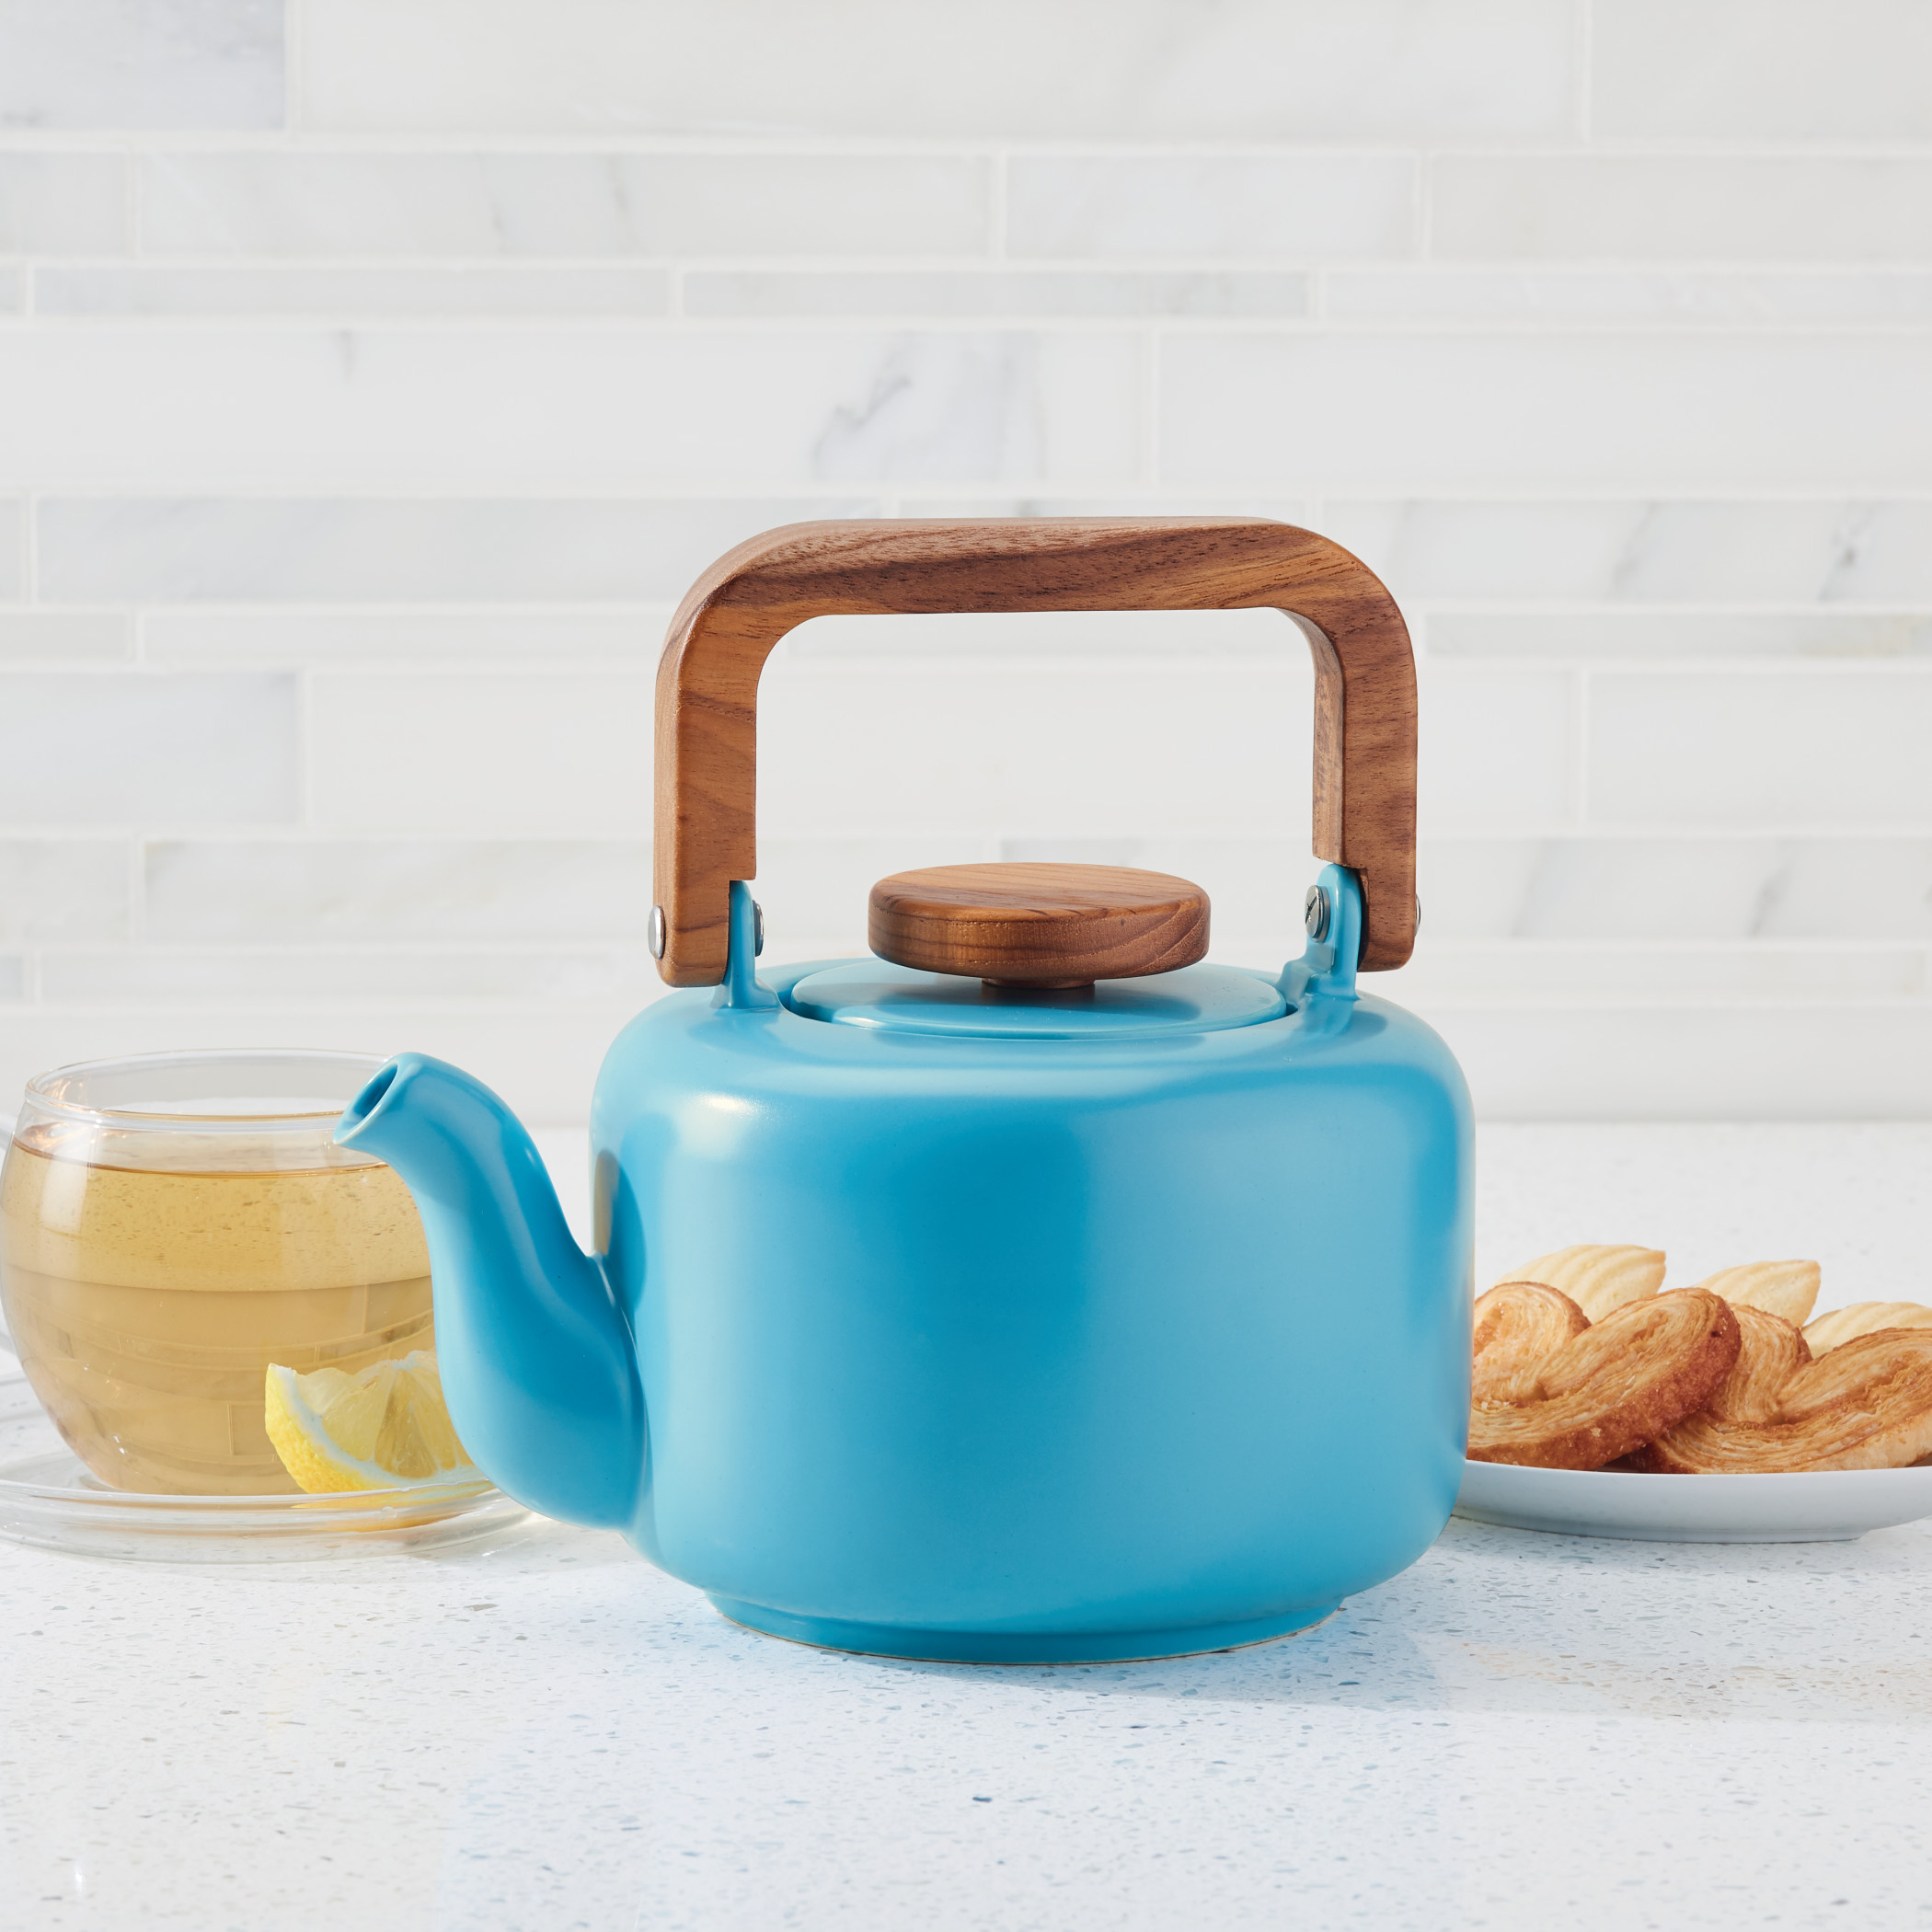 BonJour Ceramic Coffee and Tea 4-Cup Ceramic Teapot with Infuser, Aqua - image 3 of 7